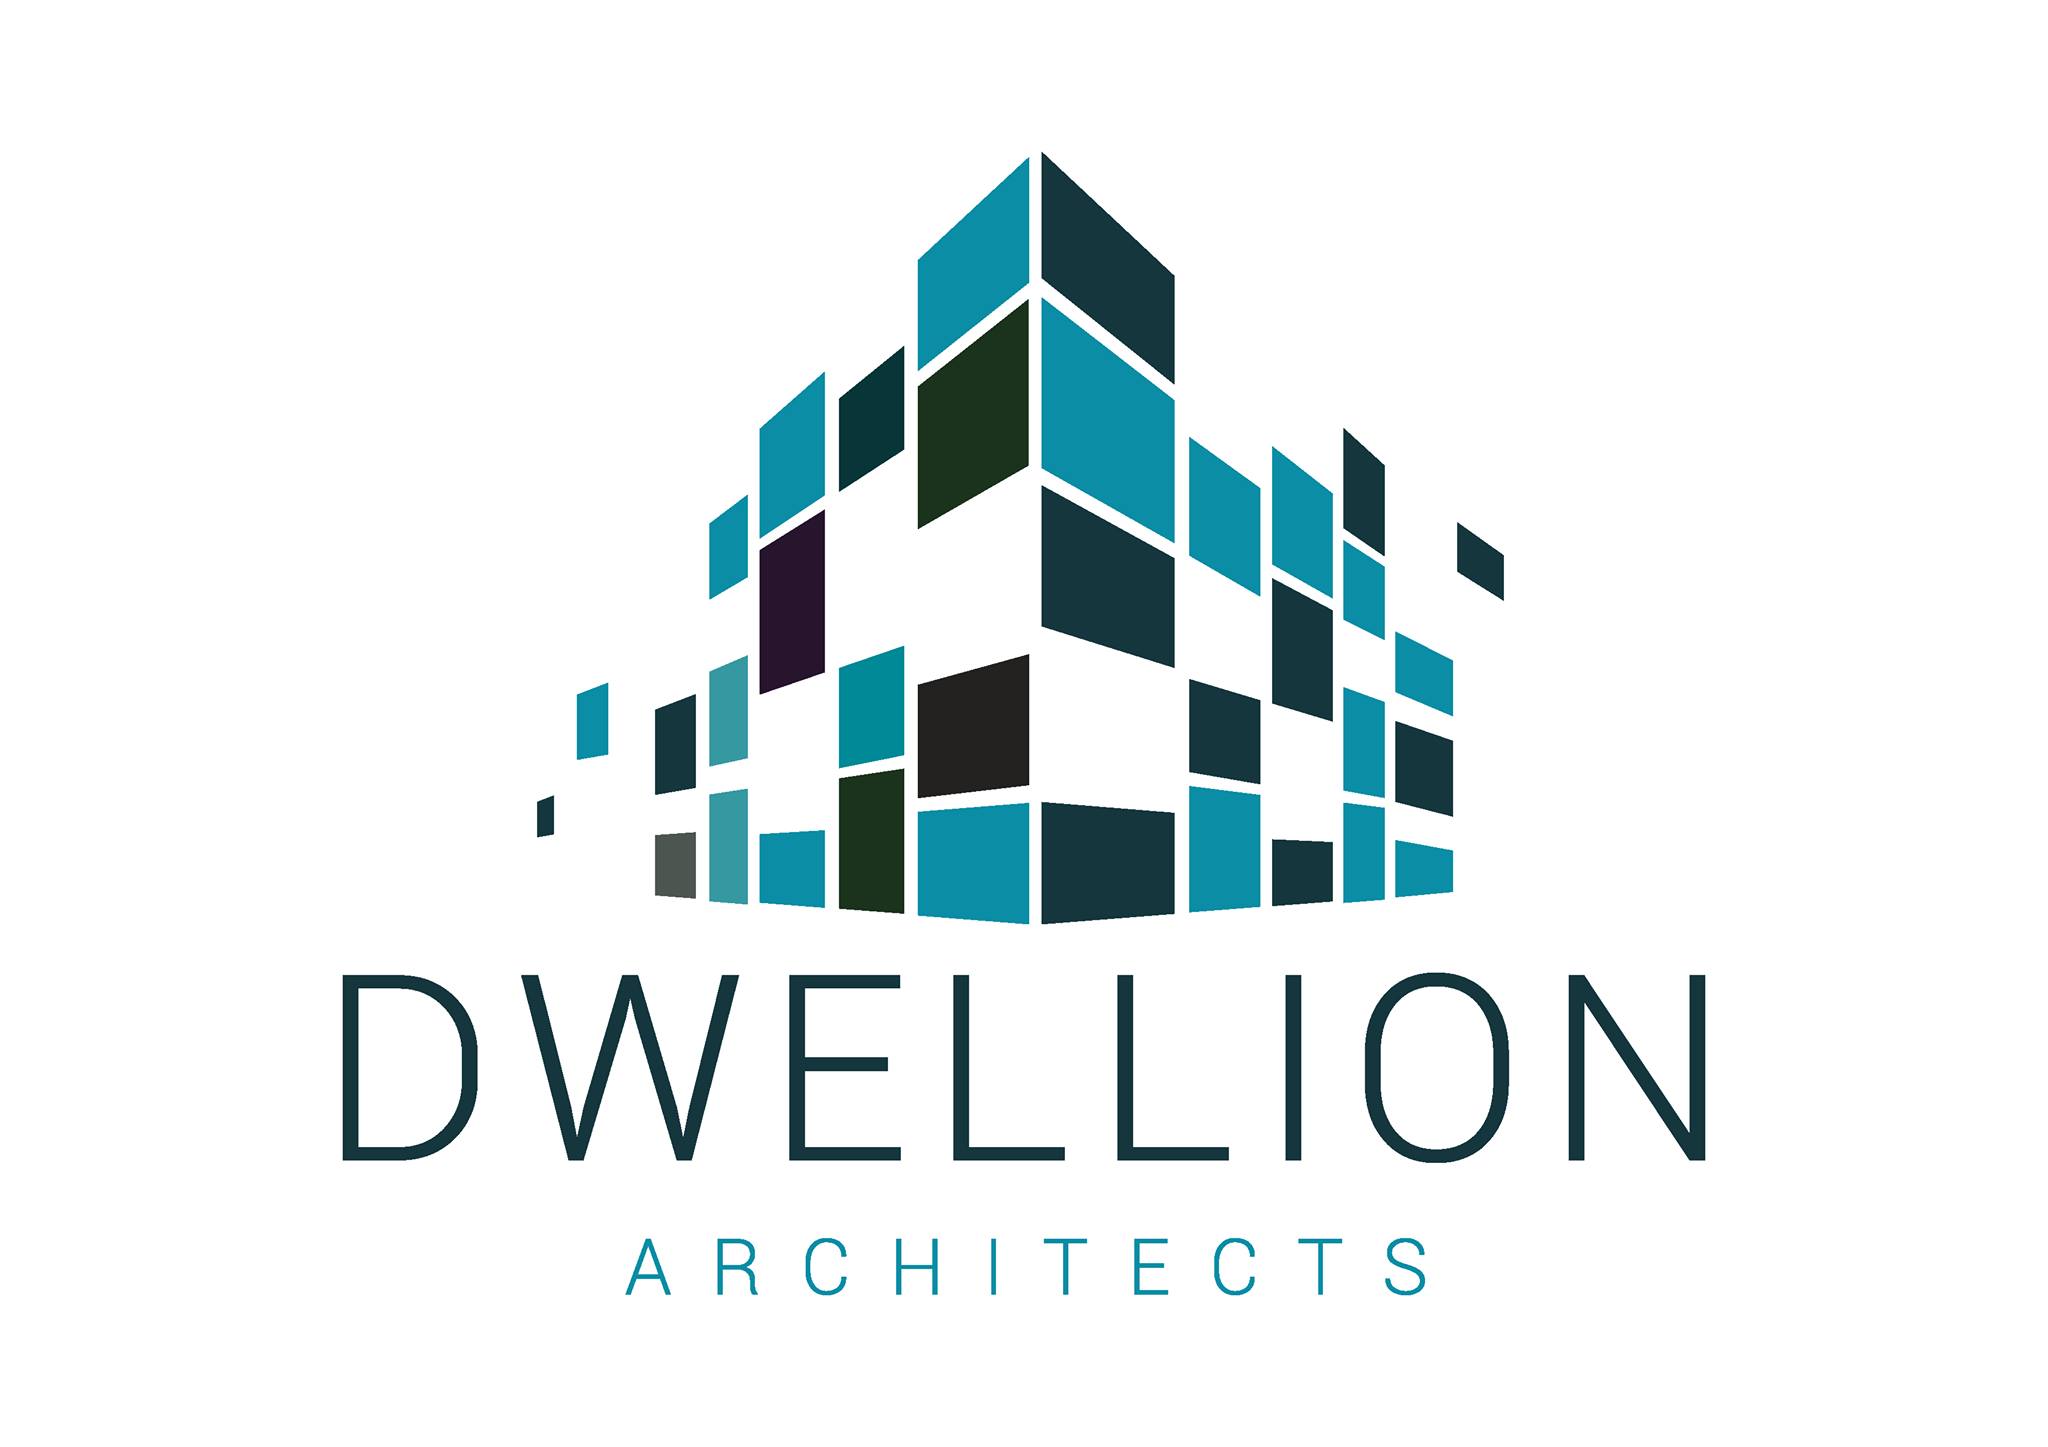 Dwellion Architecture & Interior Design|Architect|Professional Services